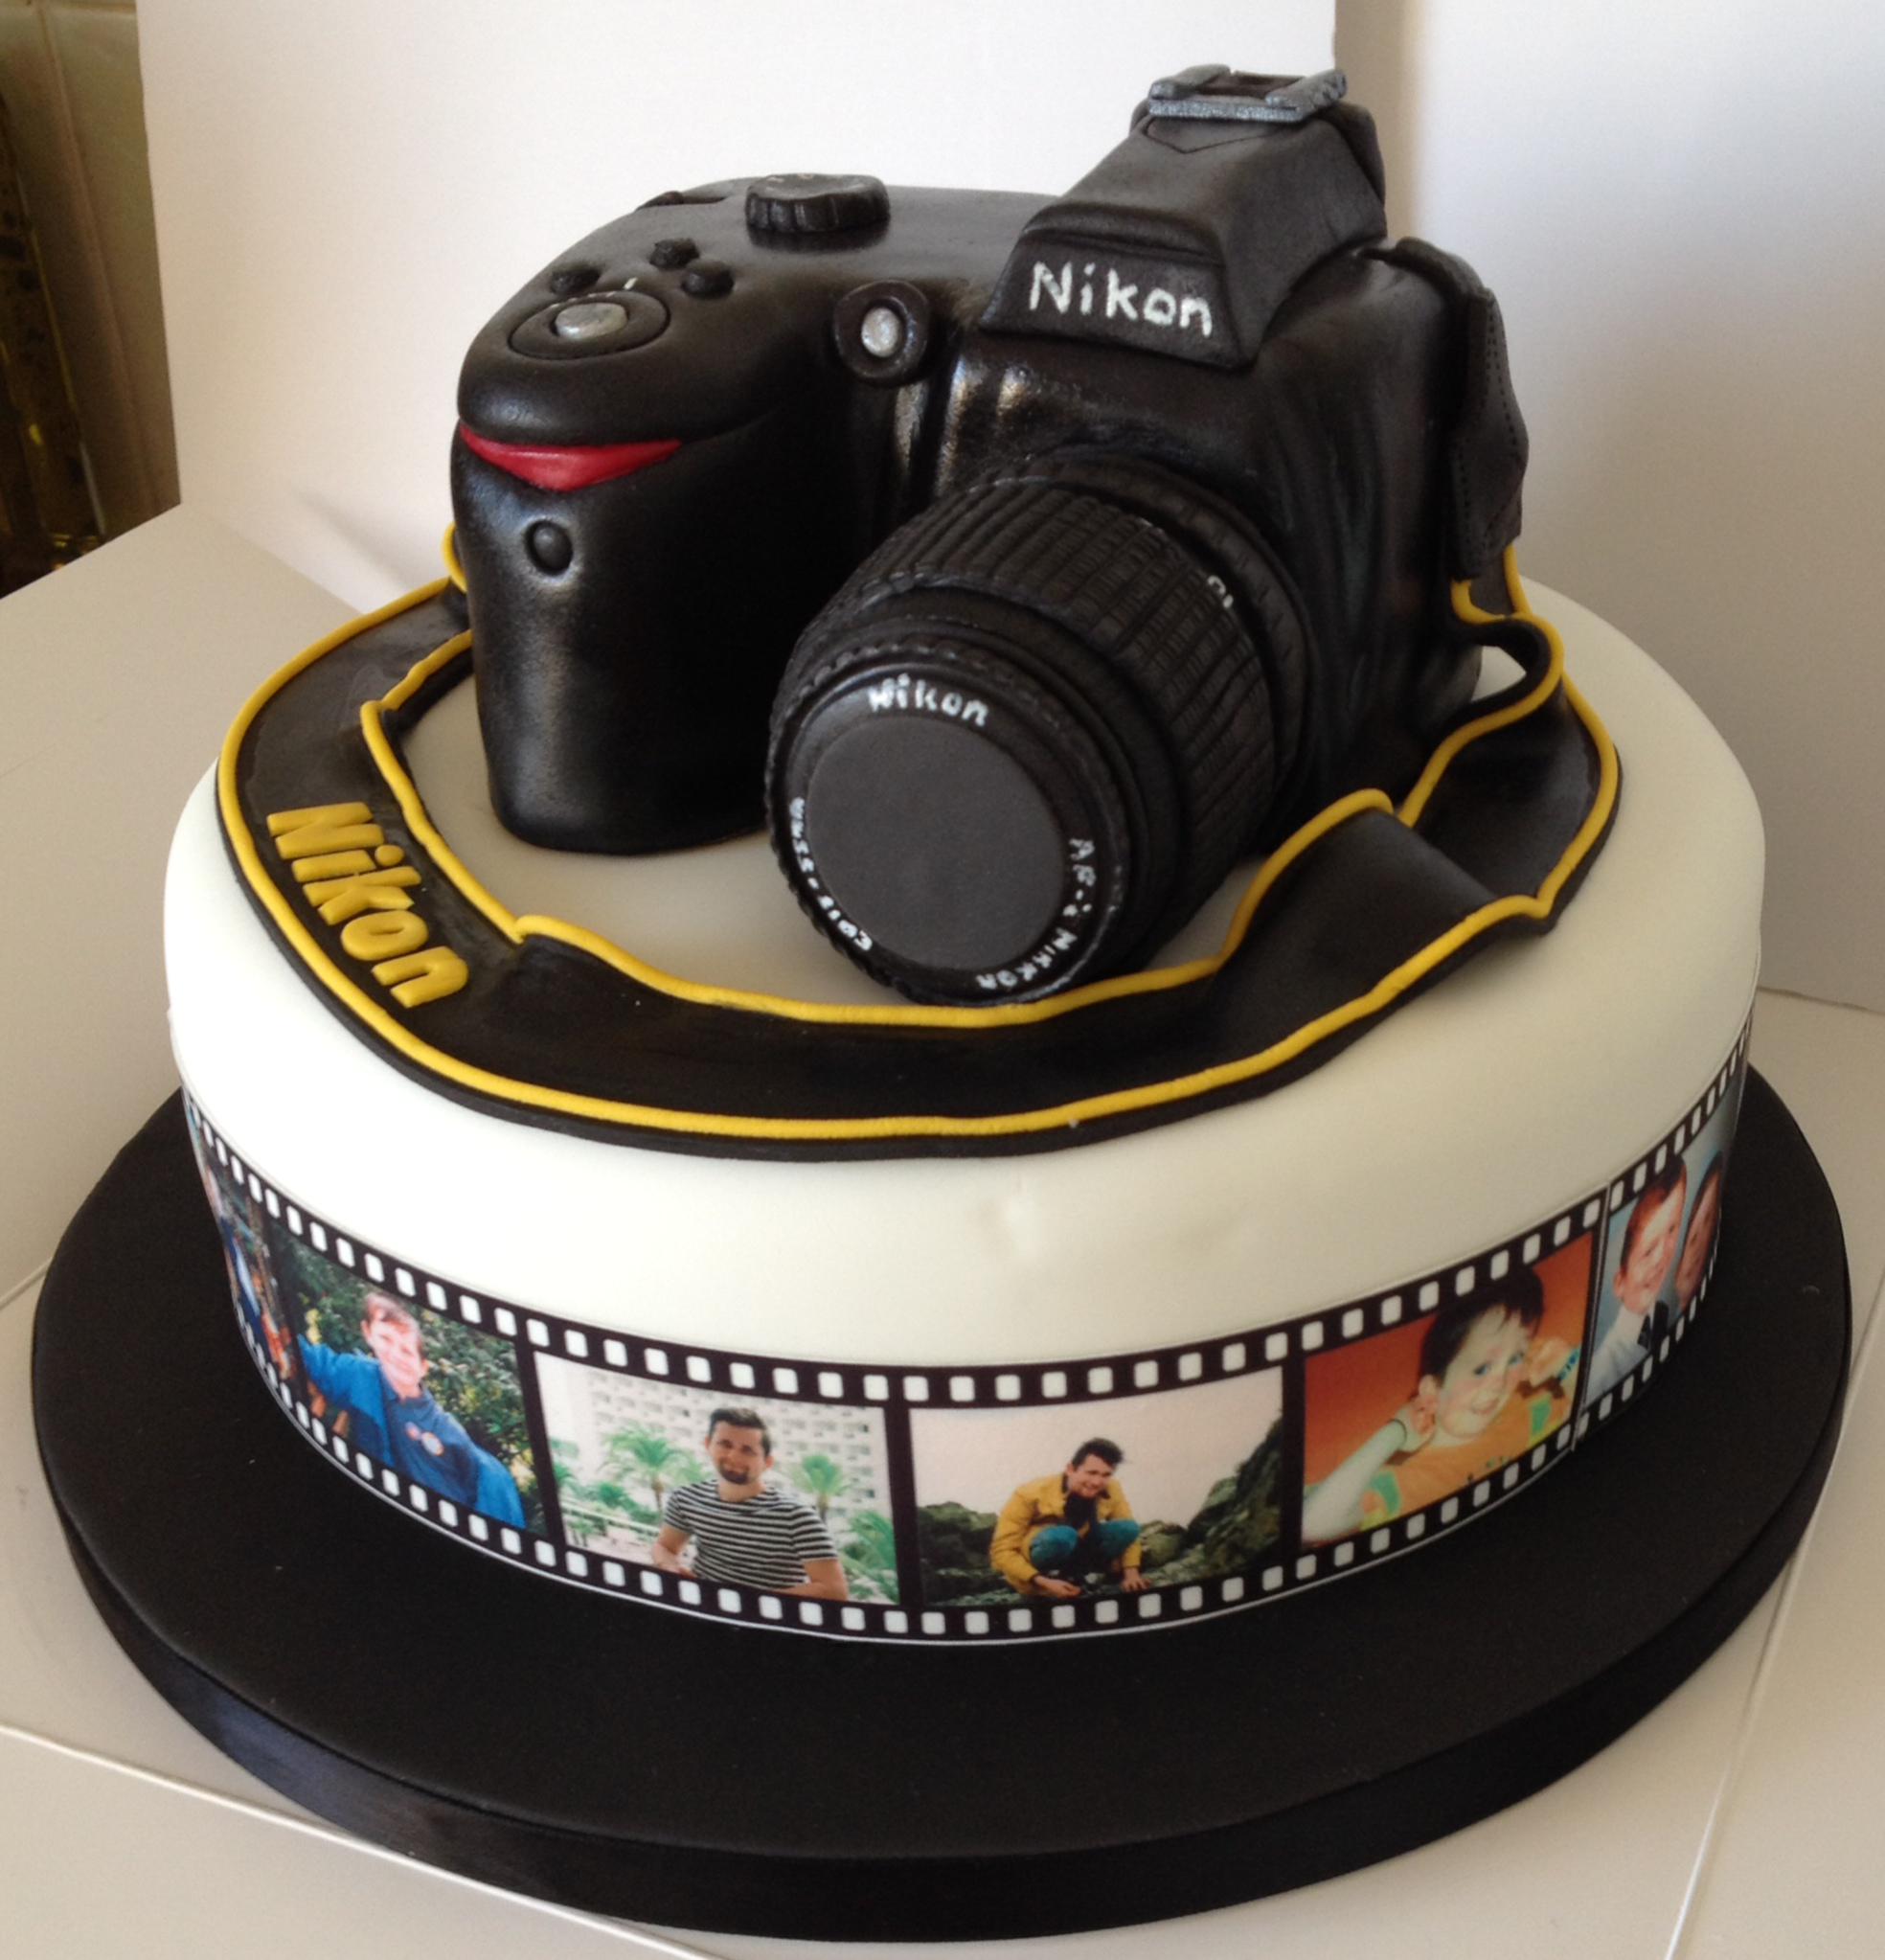 Cake Rocks on Twitter: "Camera cake #camera #photography #cake #nikon